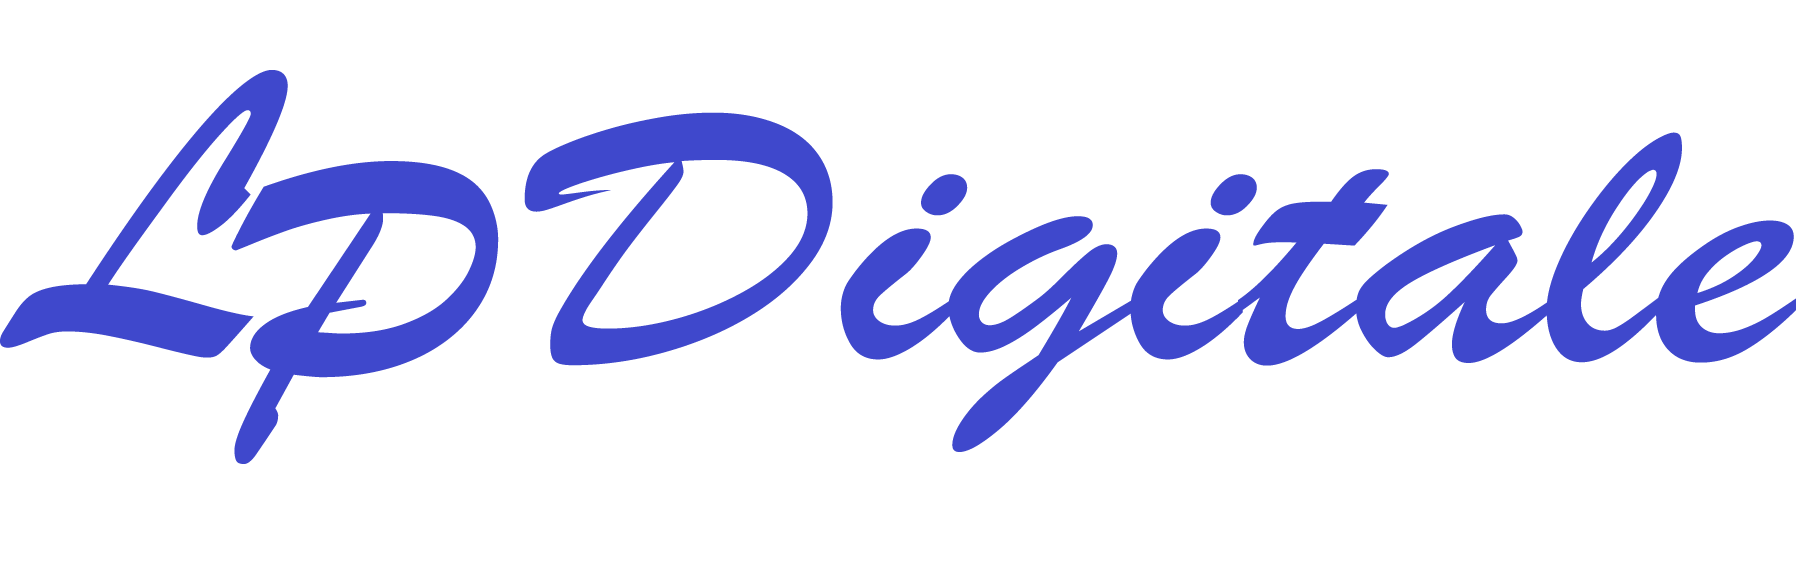 LPdigitale logo